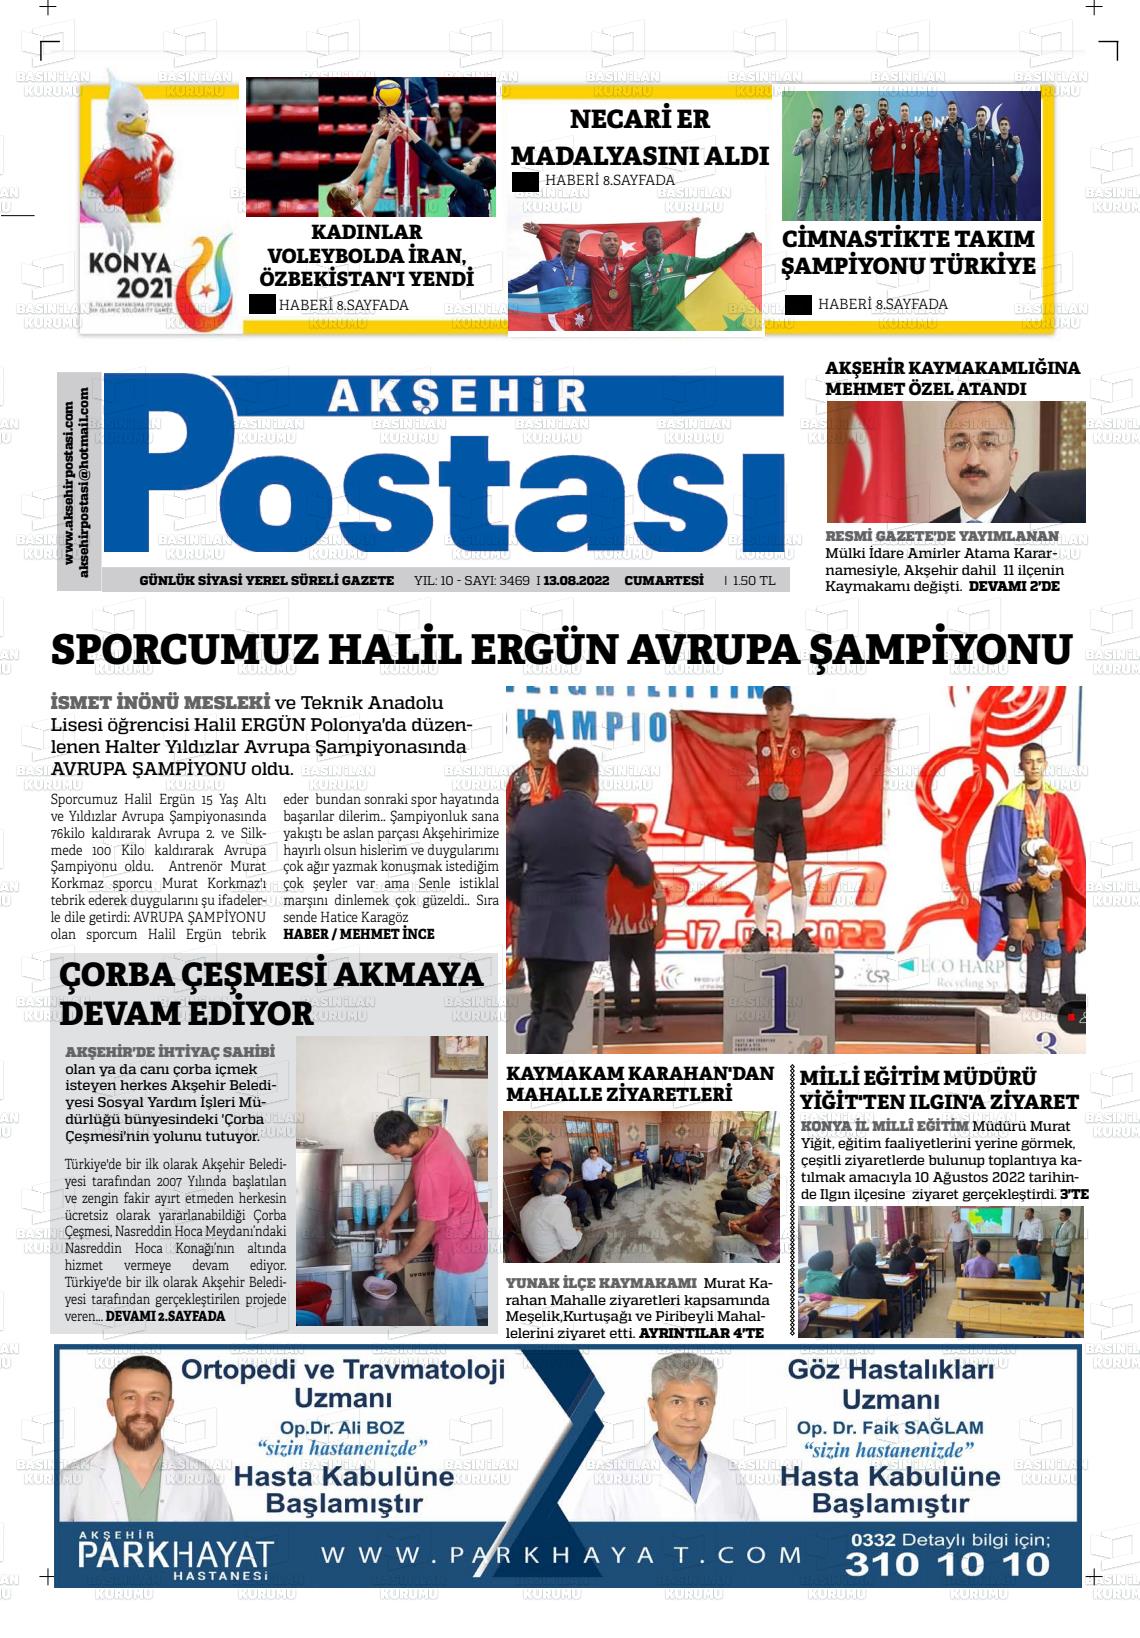 13 Ağustos 2022 Akşehir Postasi Gazete Manşeti